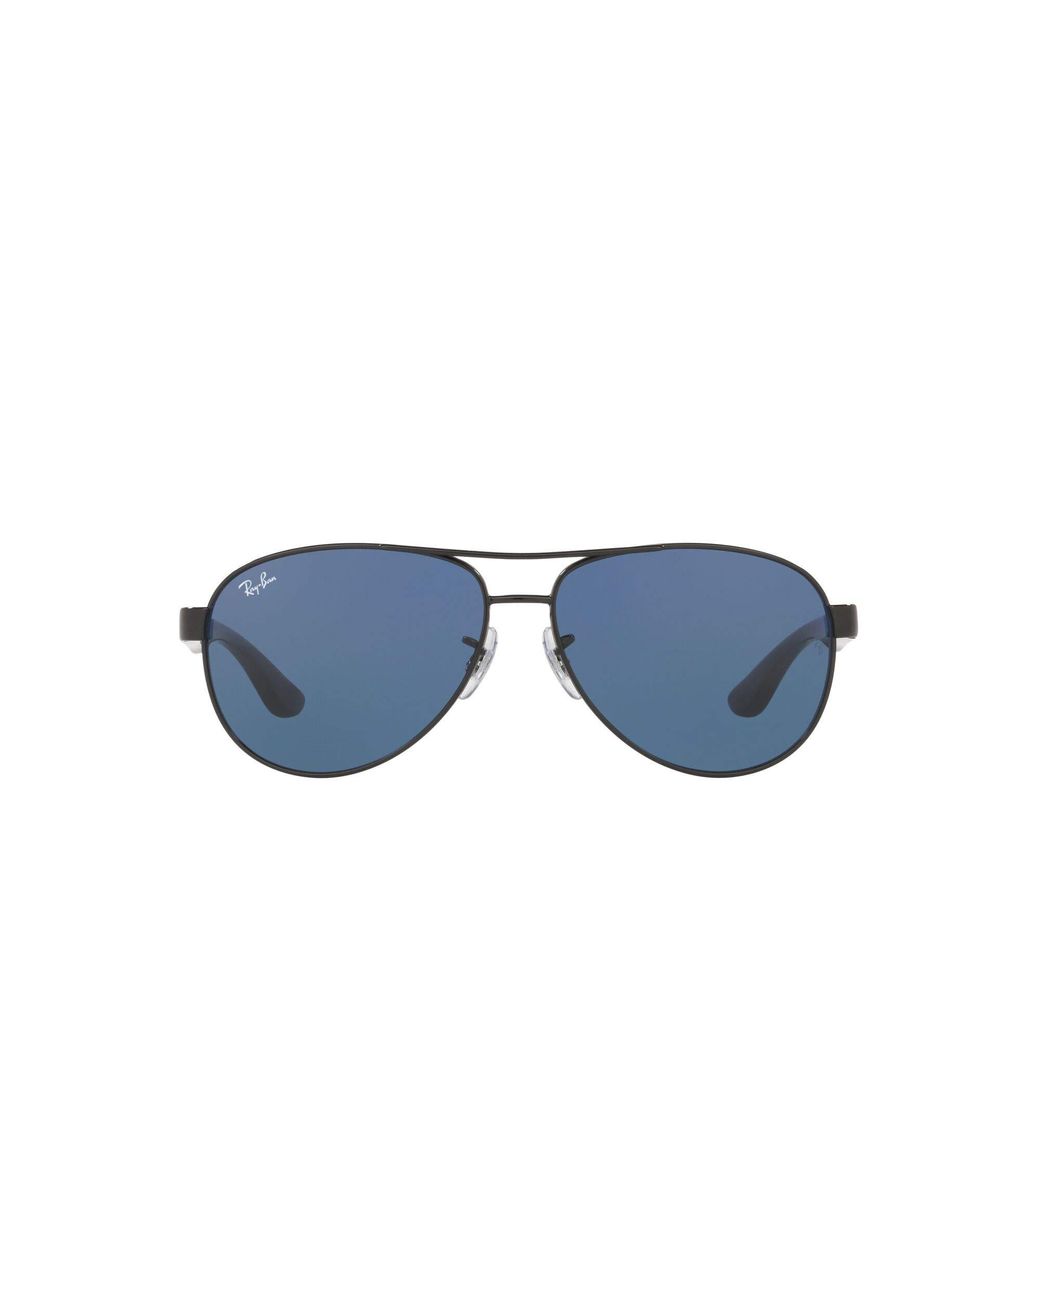 Ray-Ban Rb3457 Metal Aviator Sunglasses in Black/Dark Blue (Blue) for Men -  Save 4% - Lyst